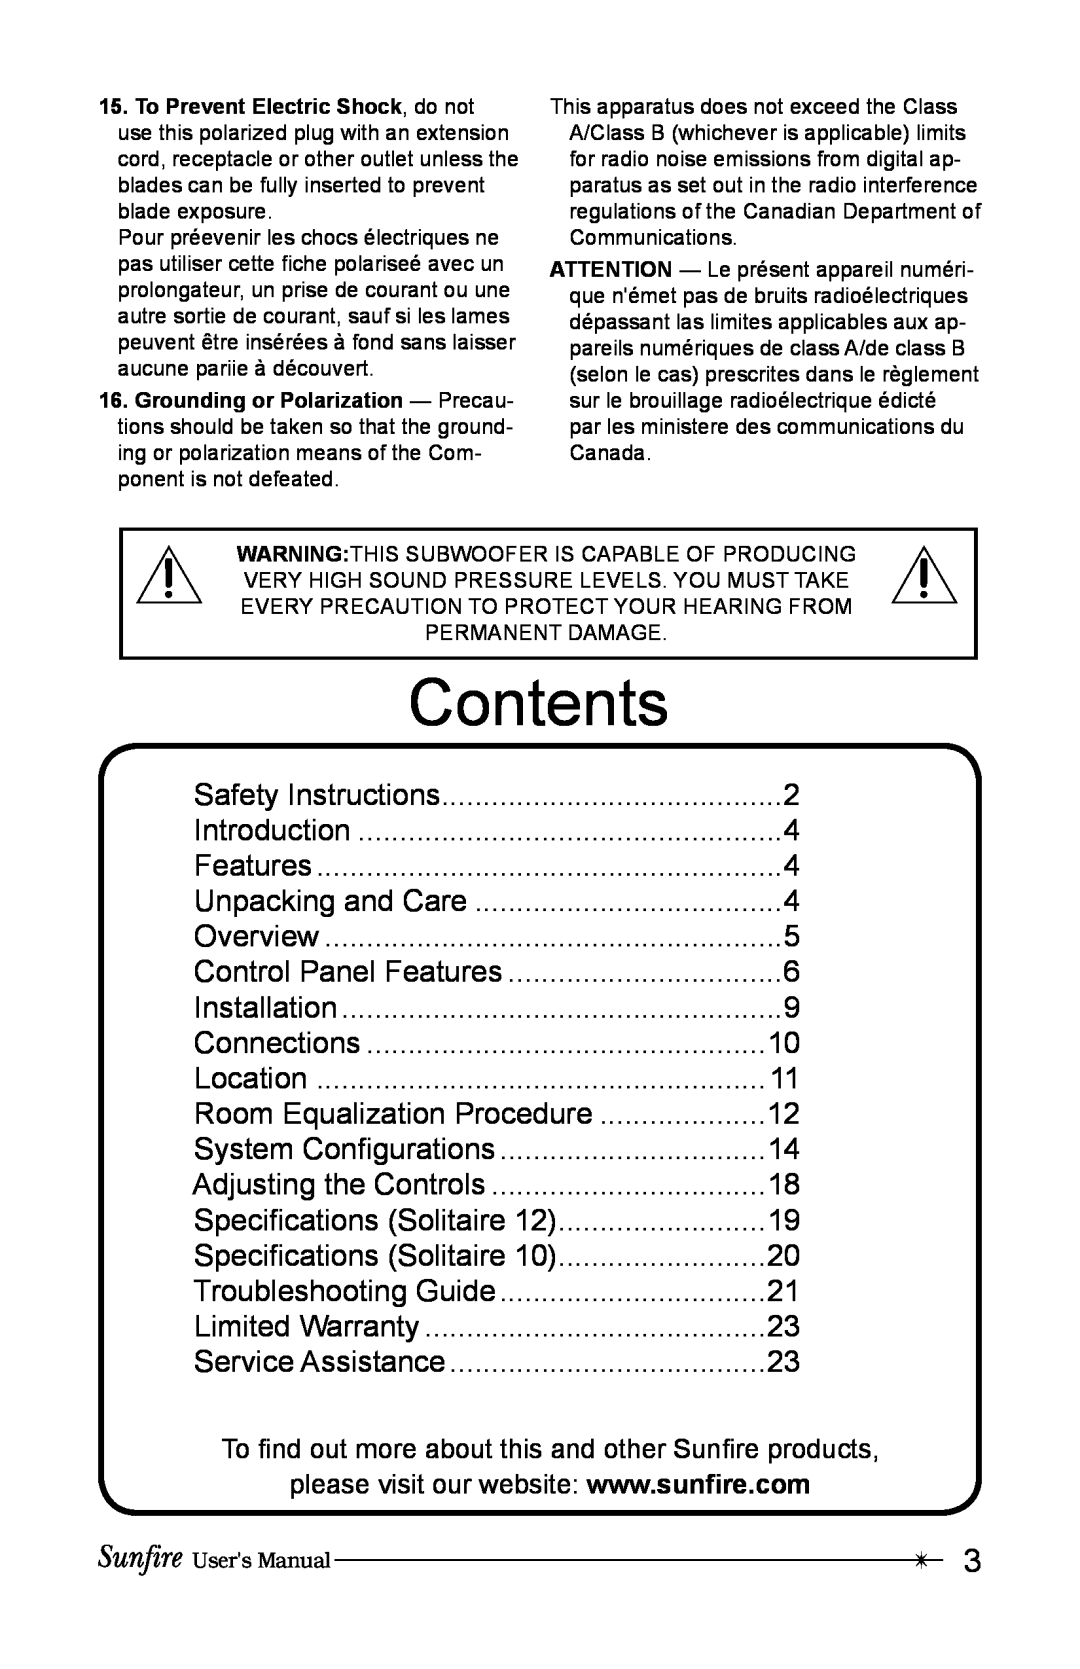 Sunfire 12 user manual Contents 